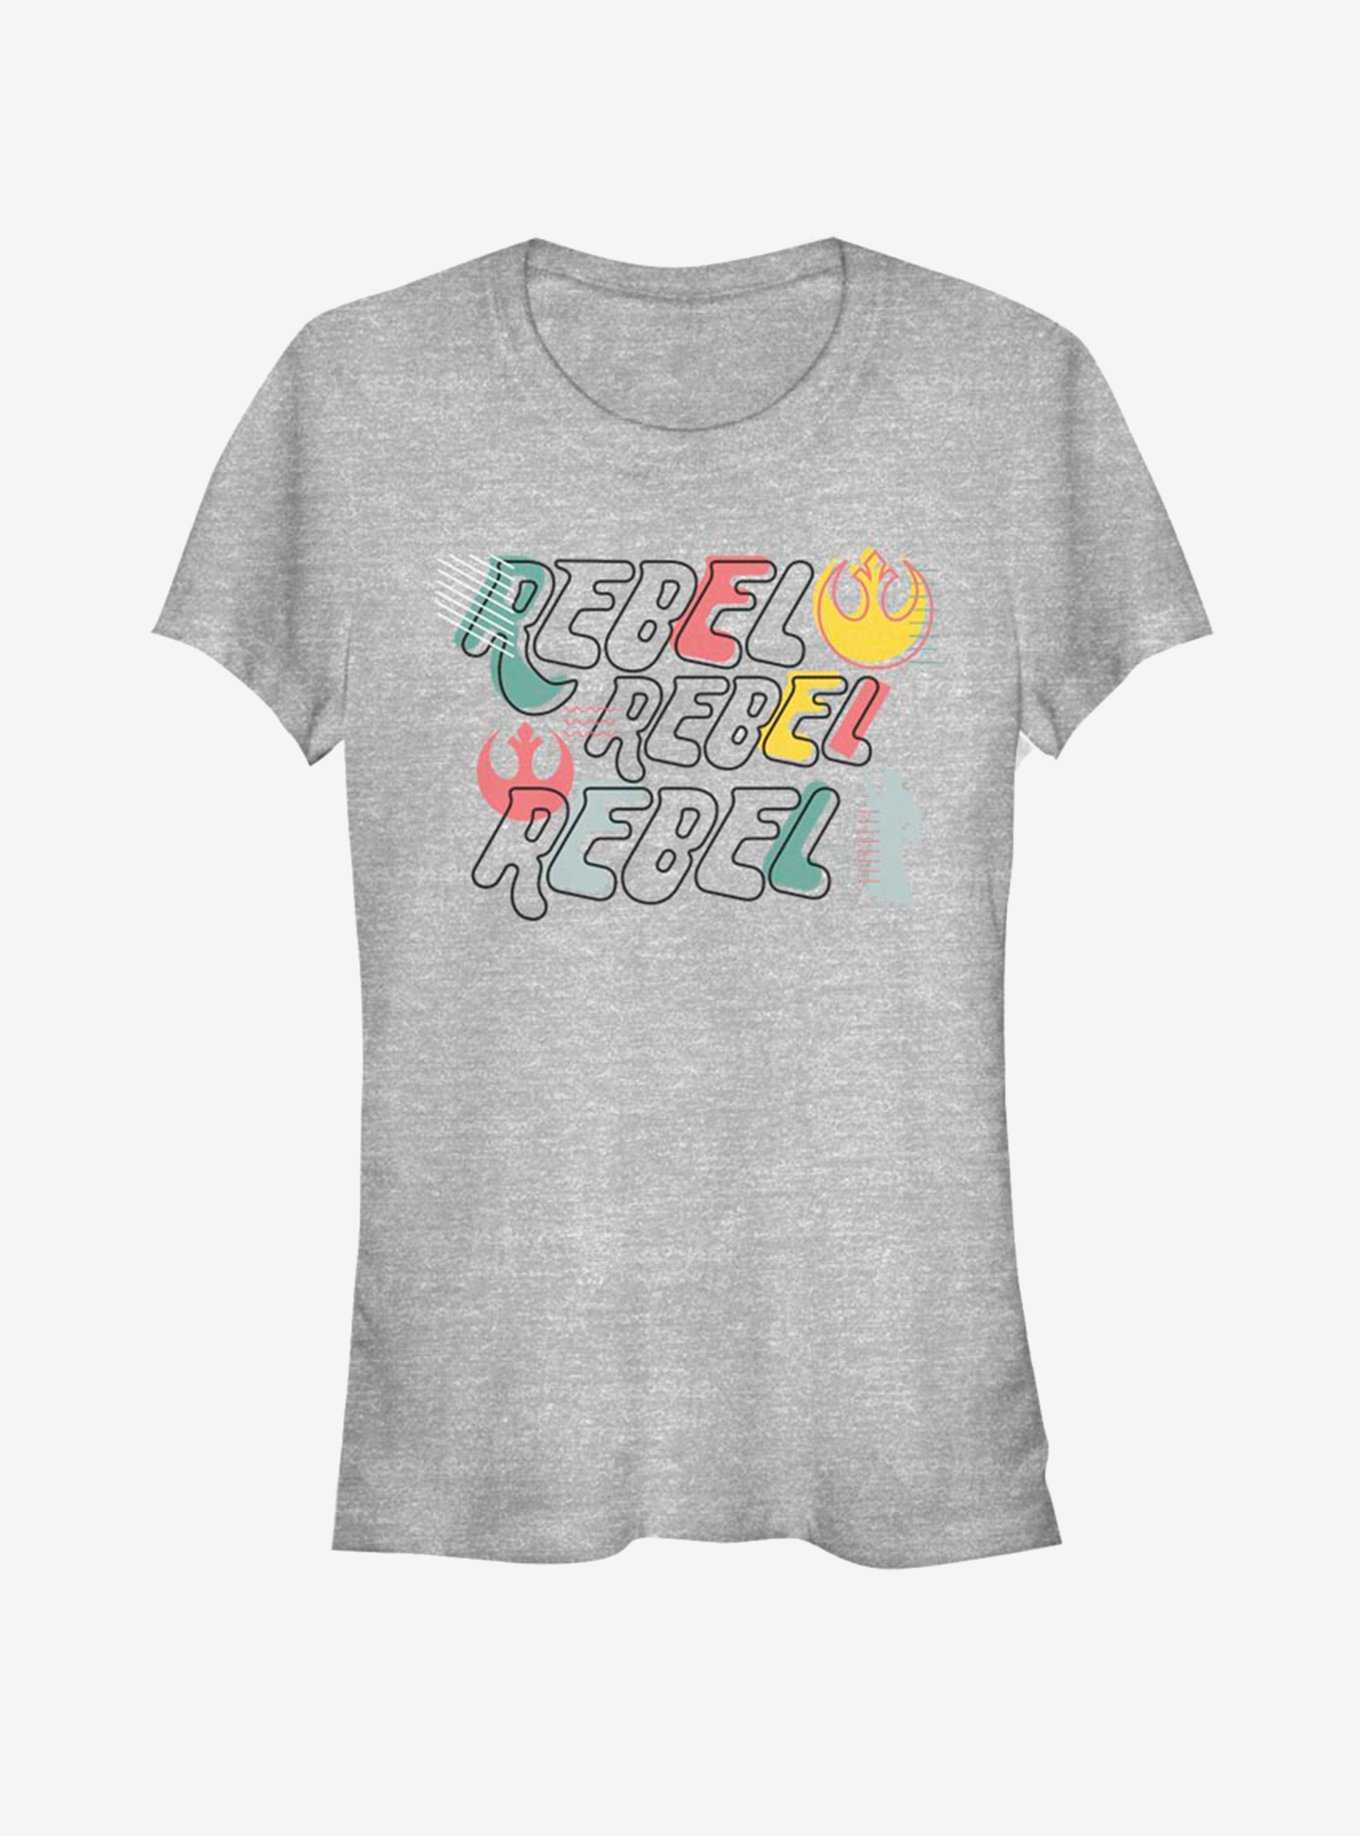 Star Wars Rebel Rebel Girls T-Shirt, , hi-res